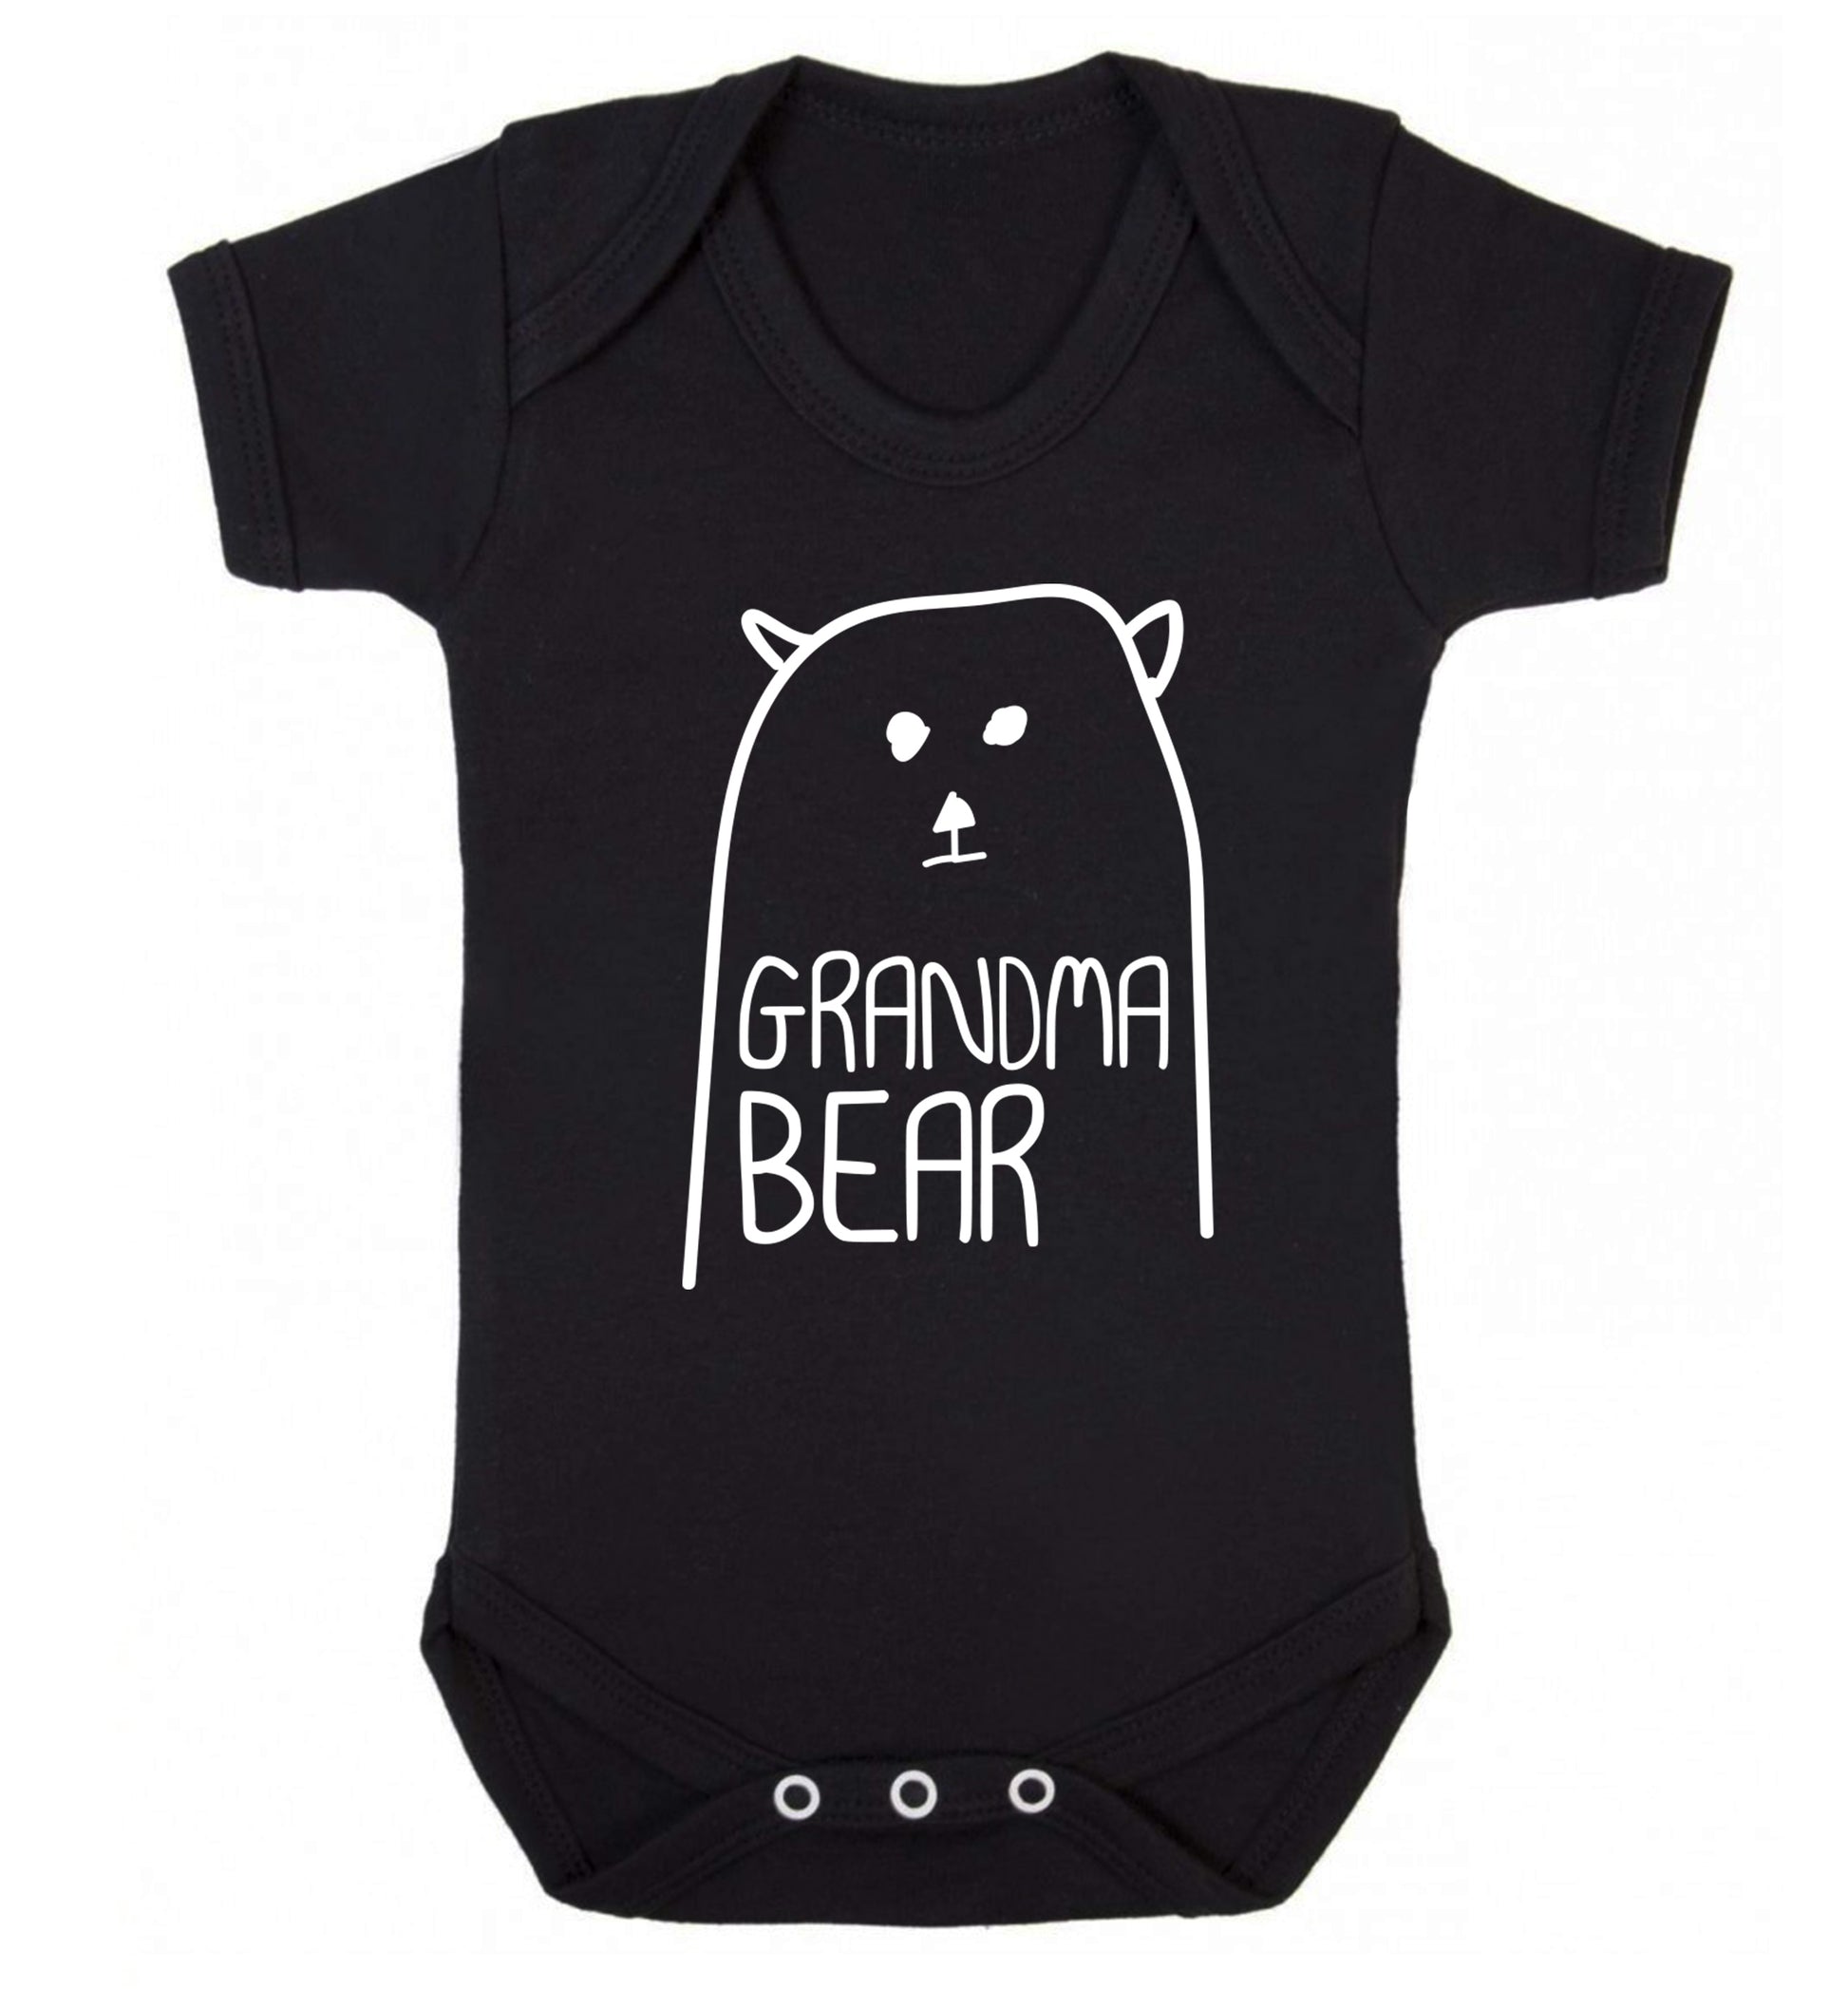 Grandma bear Baby Vest black 18-24 months